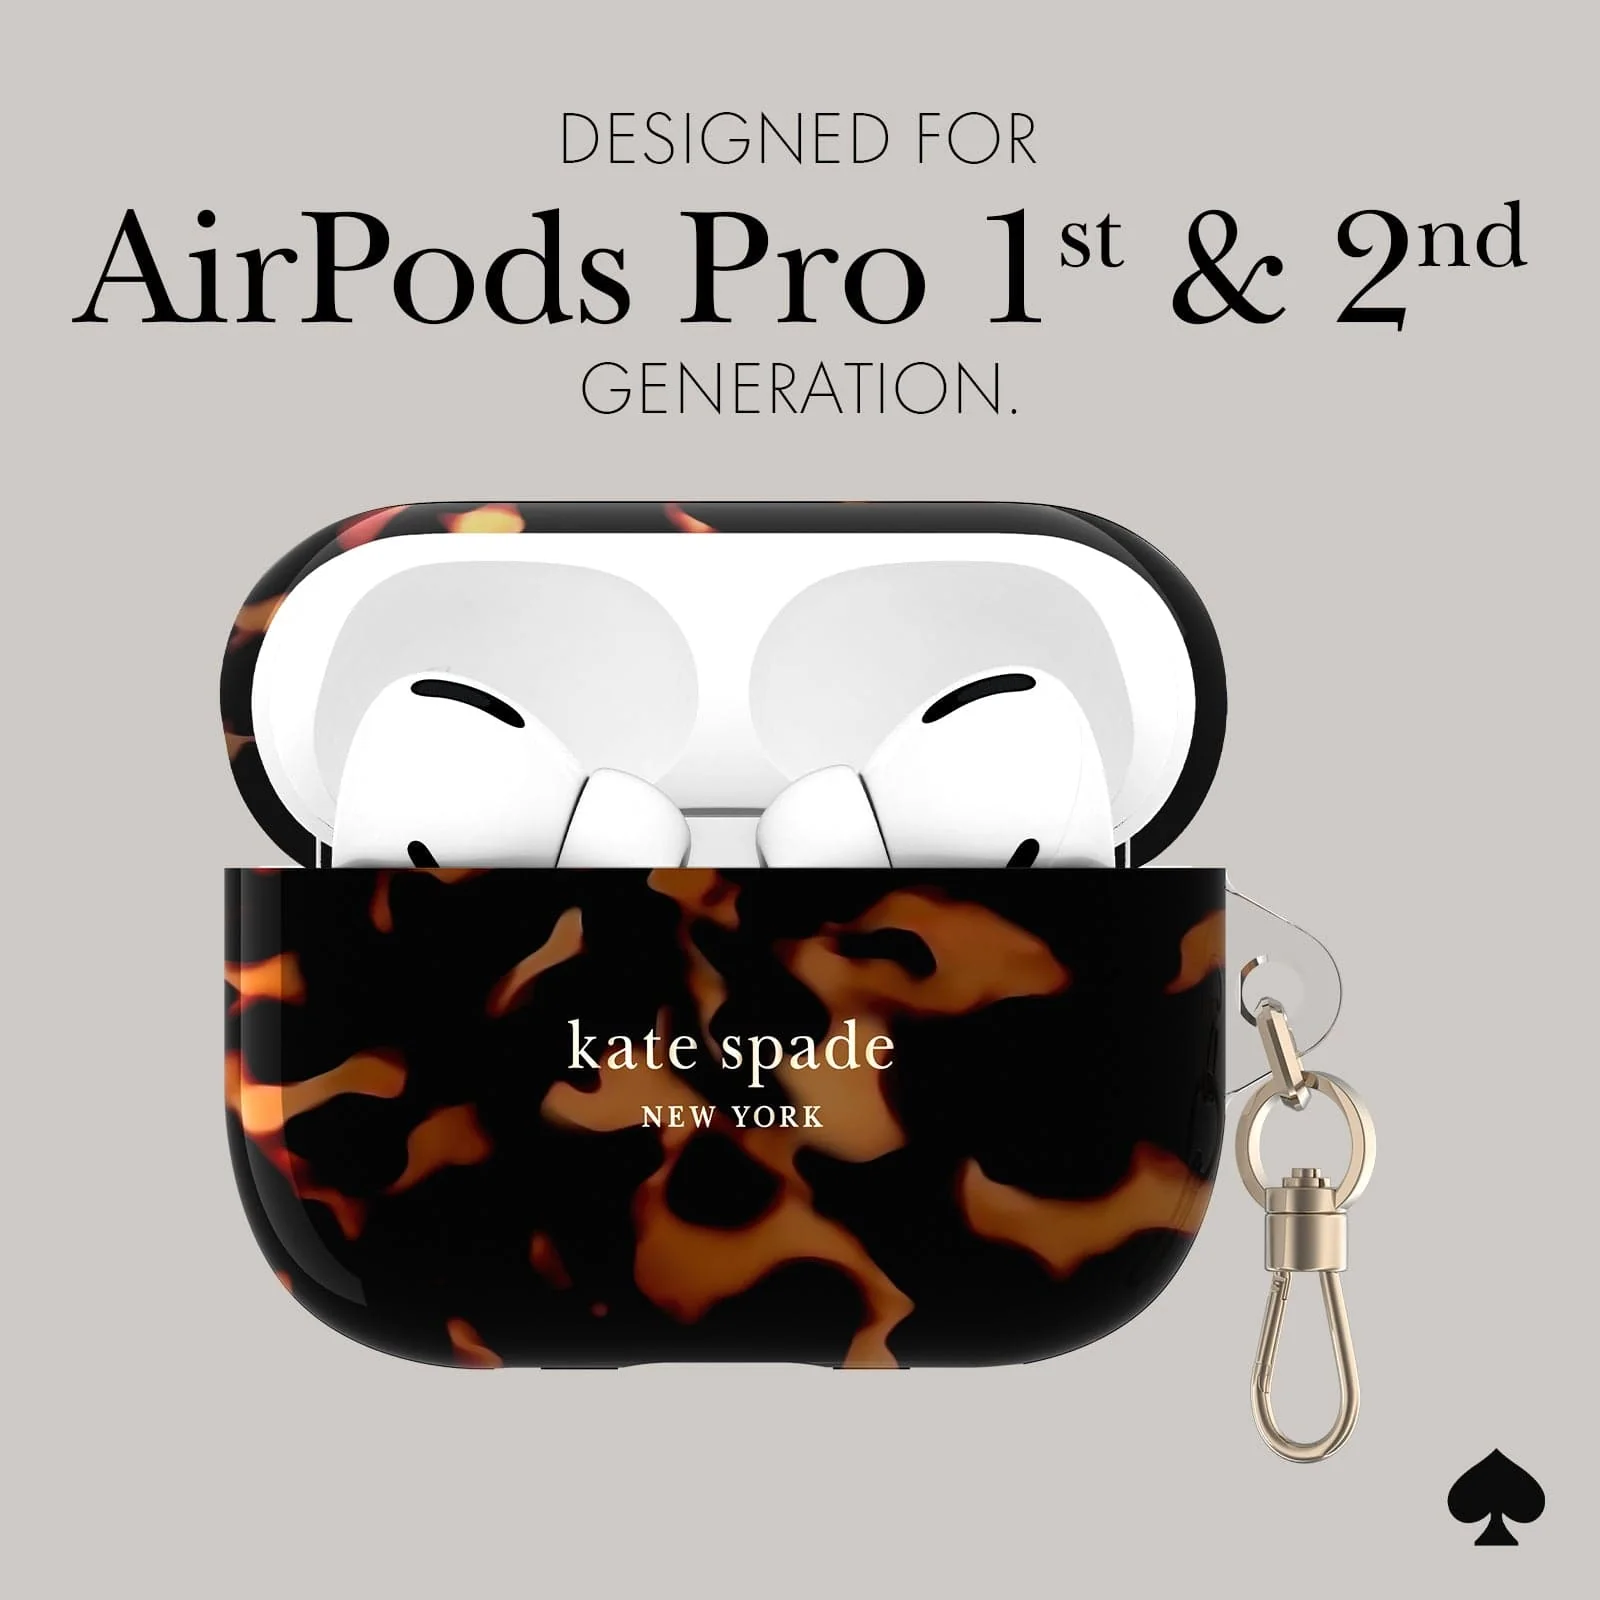 Kate Spade New York รุ่น Protective - เคส AirPods Pro 1/2 - ลาย Transparent Tortoise